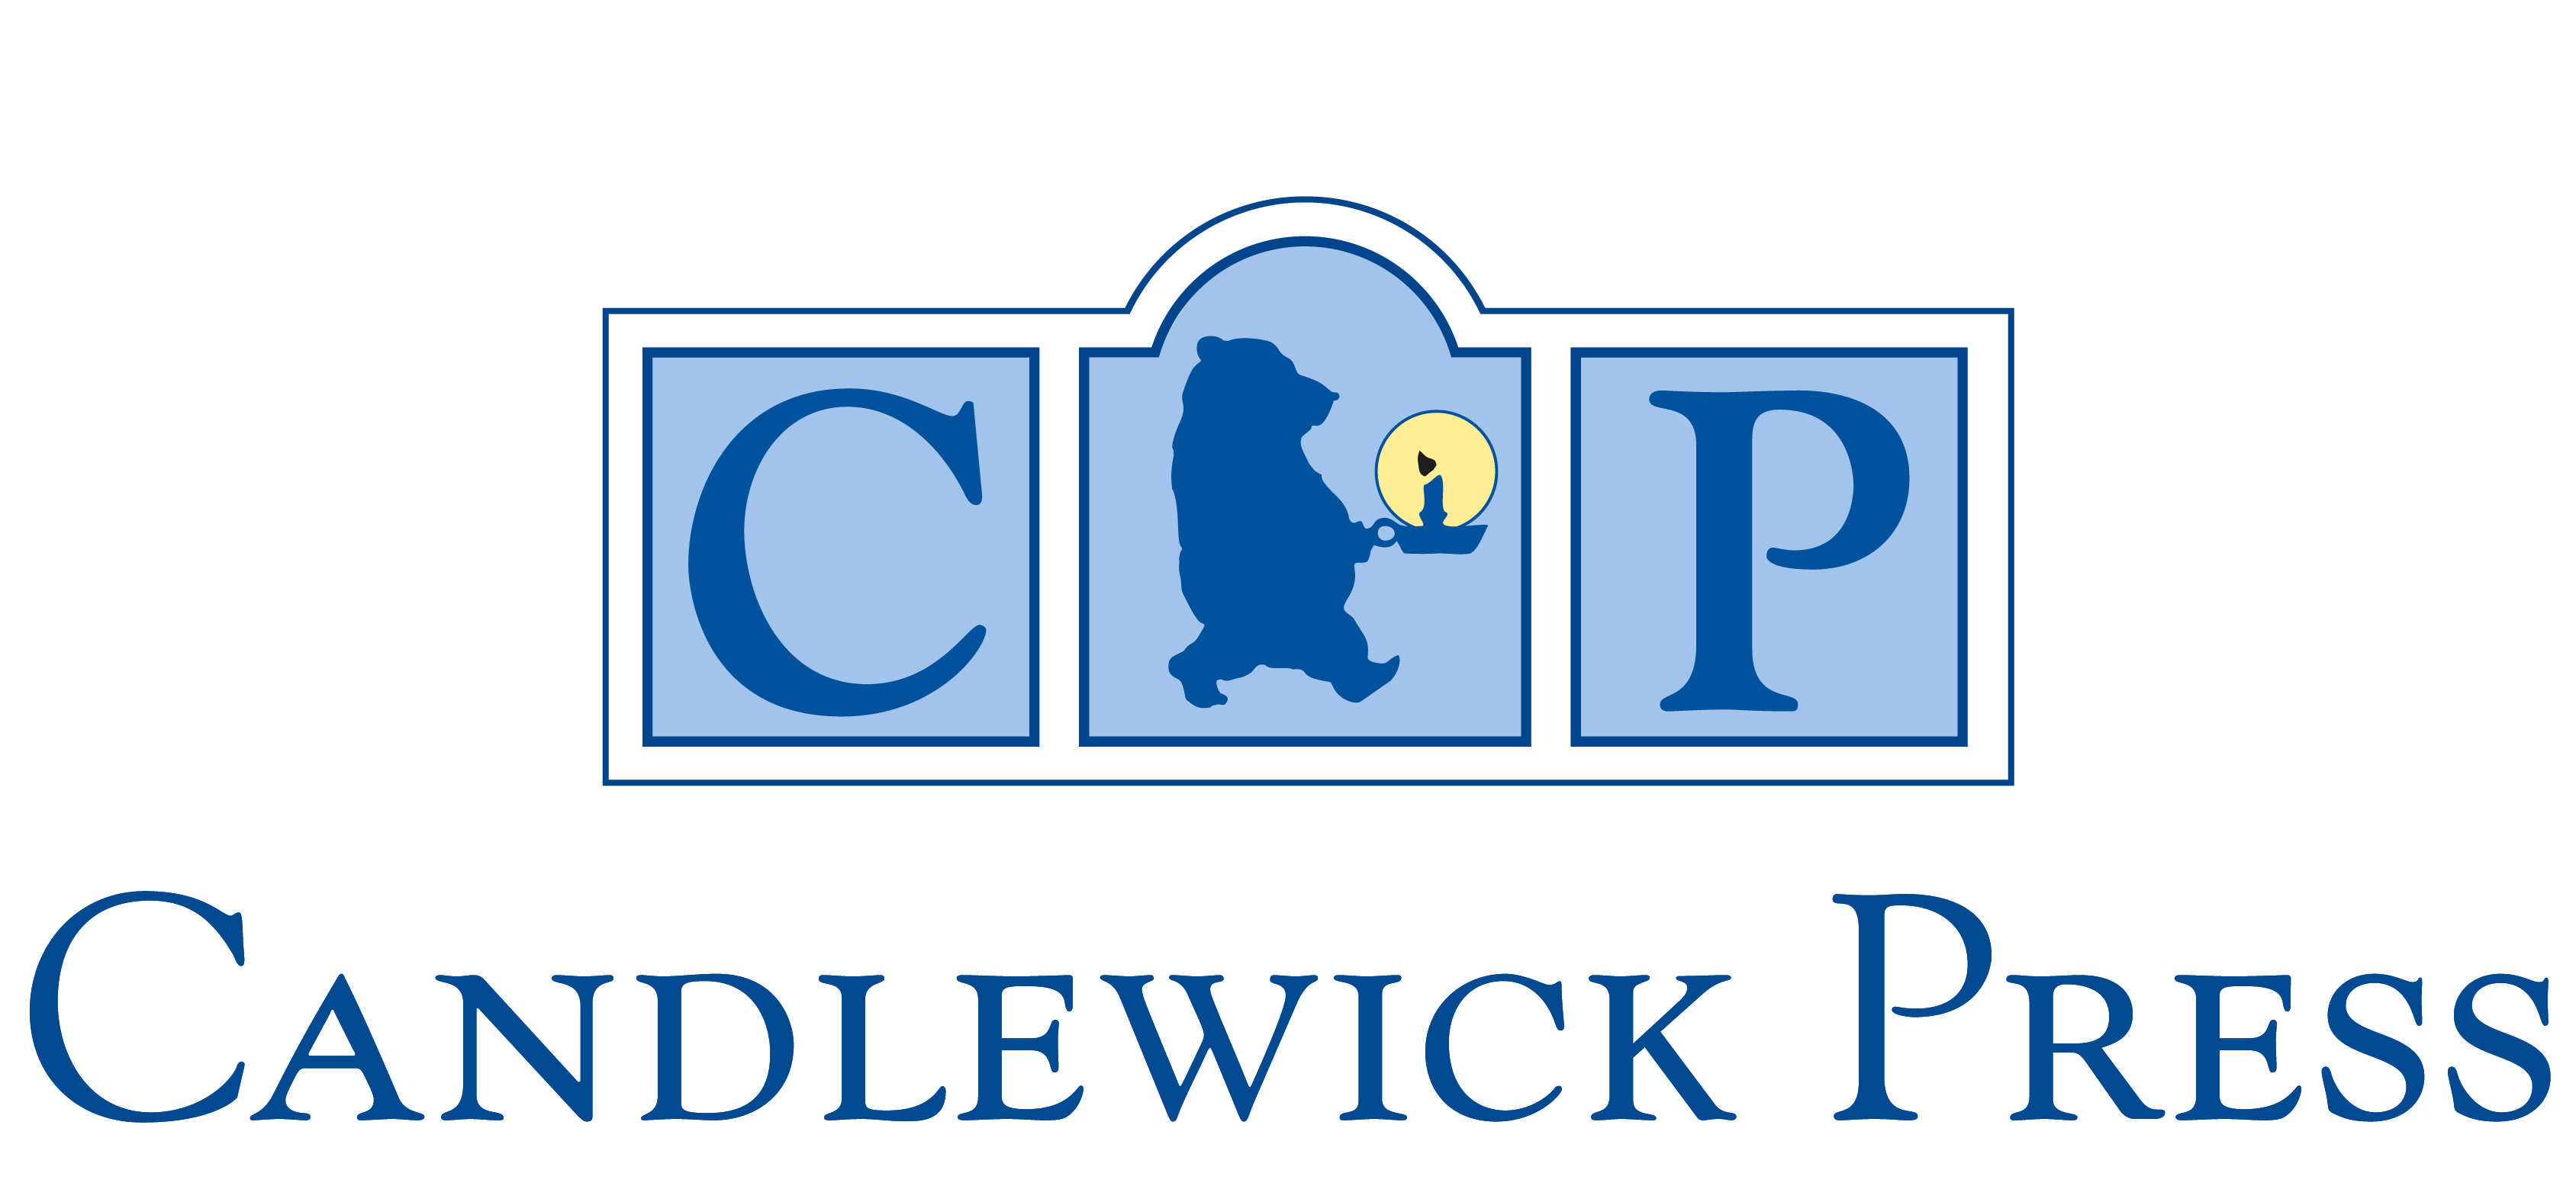 candlewick_press_logo-01-1